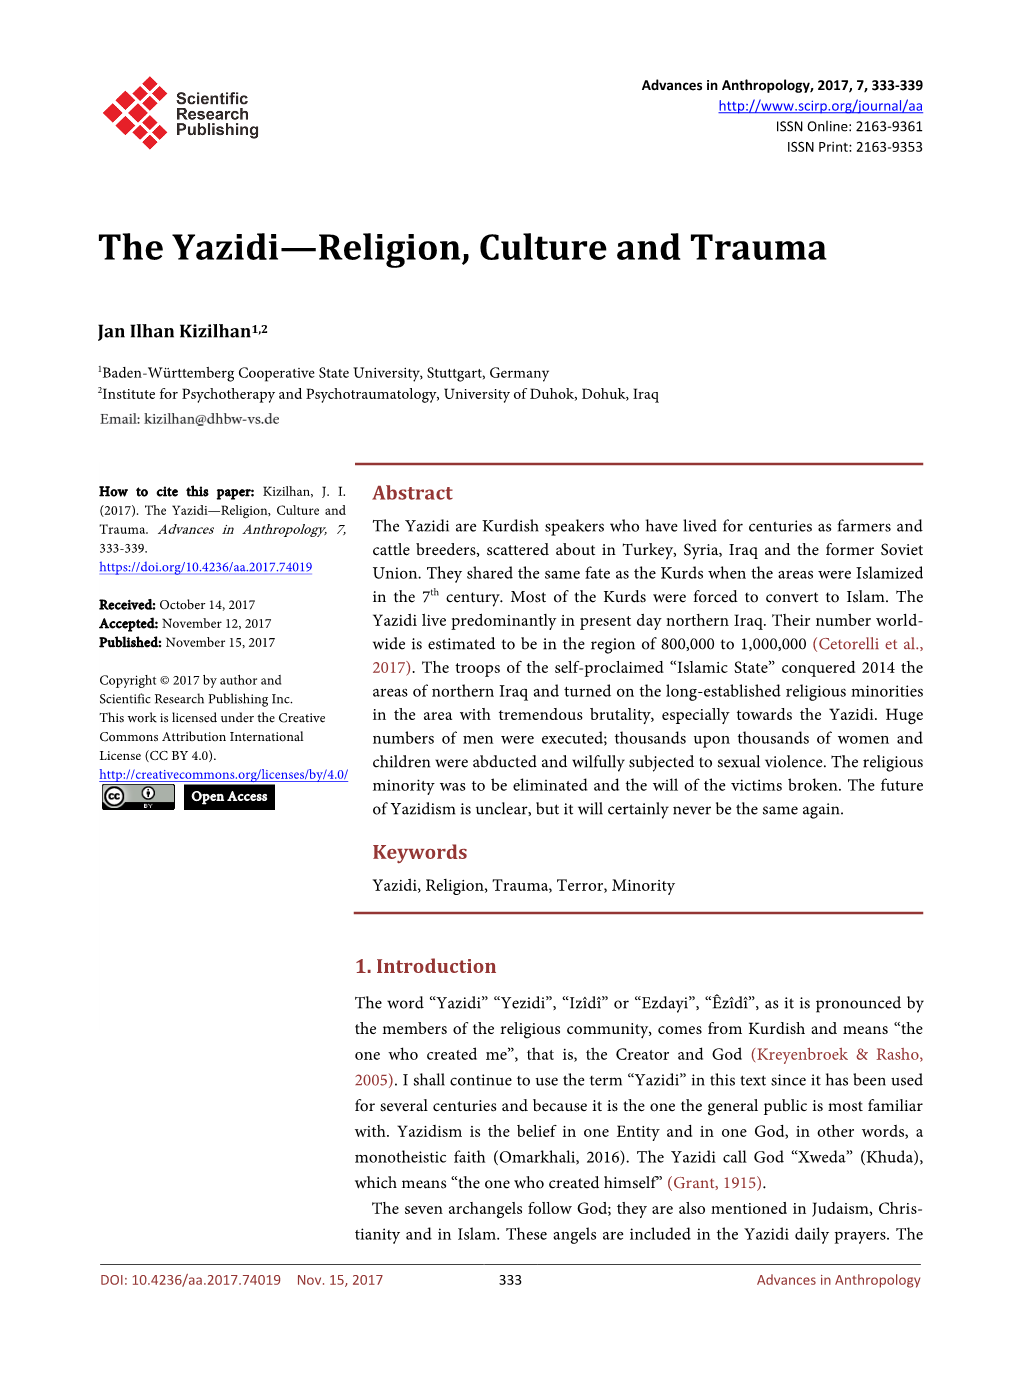 The Yazidi—Religion, Culture and Trauma